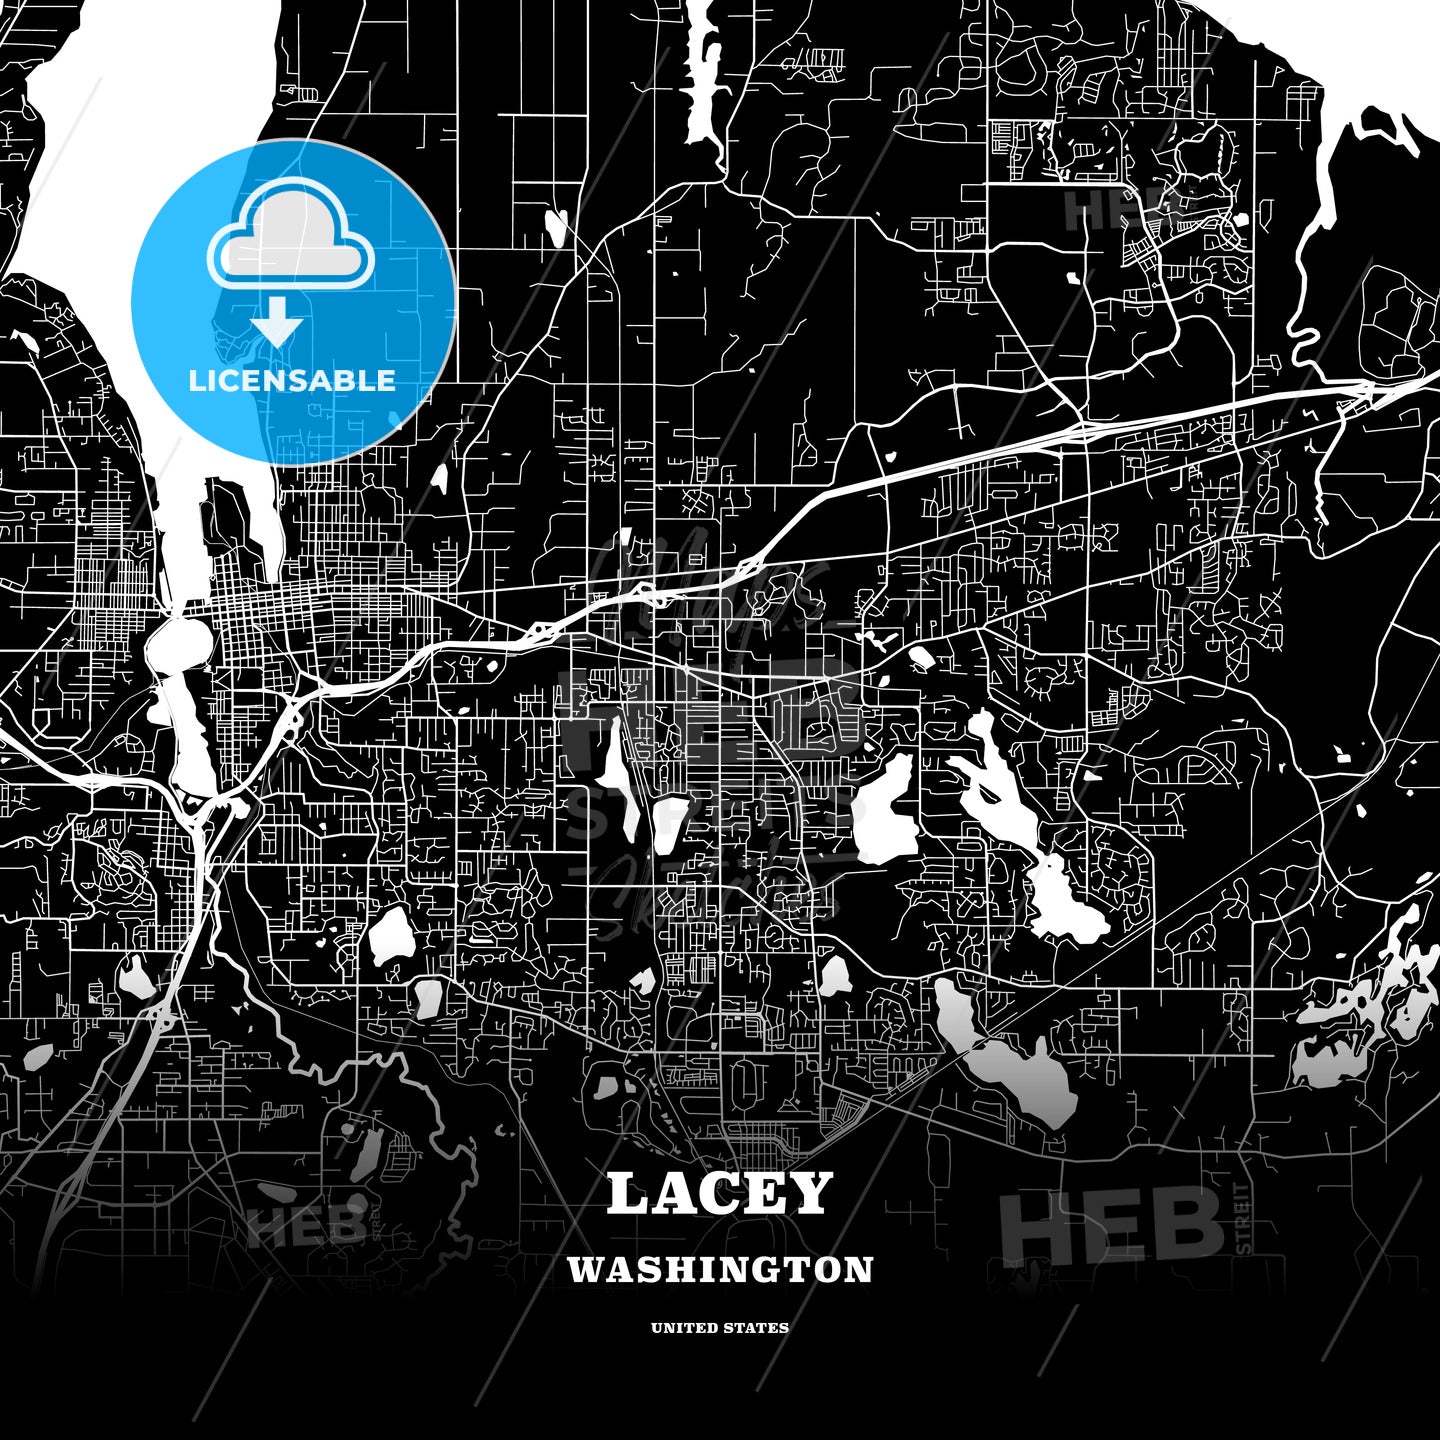 Lacey, Washington, USA map